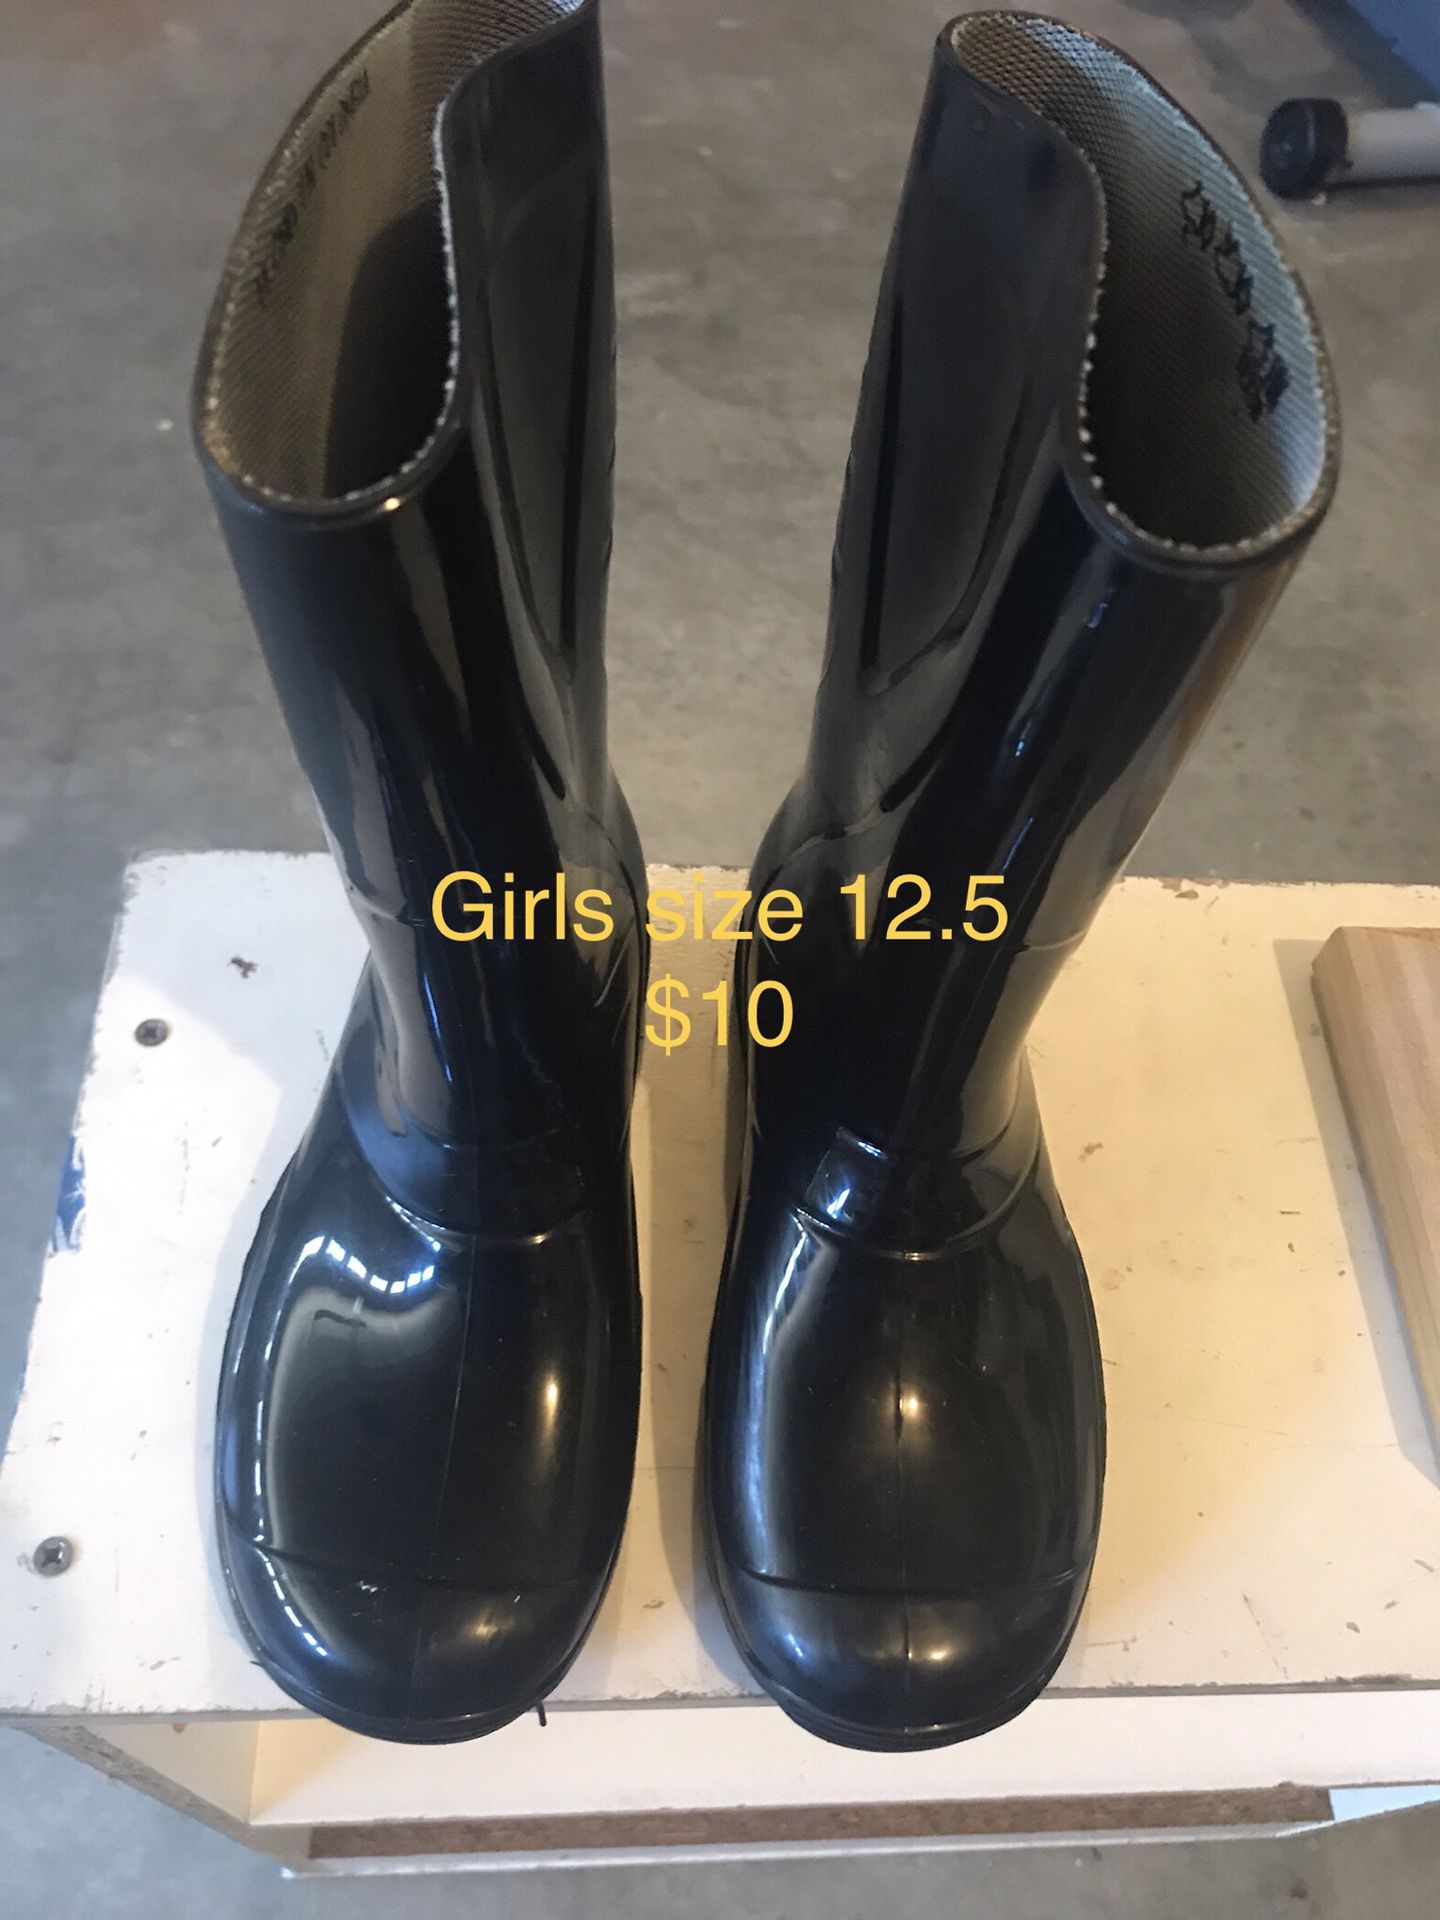 Skeeper Children’s rain boots size 30(US 12.5) like new